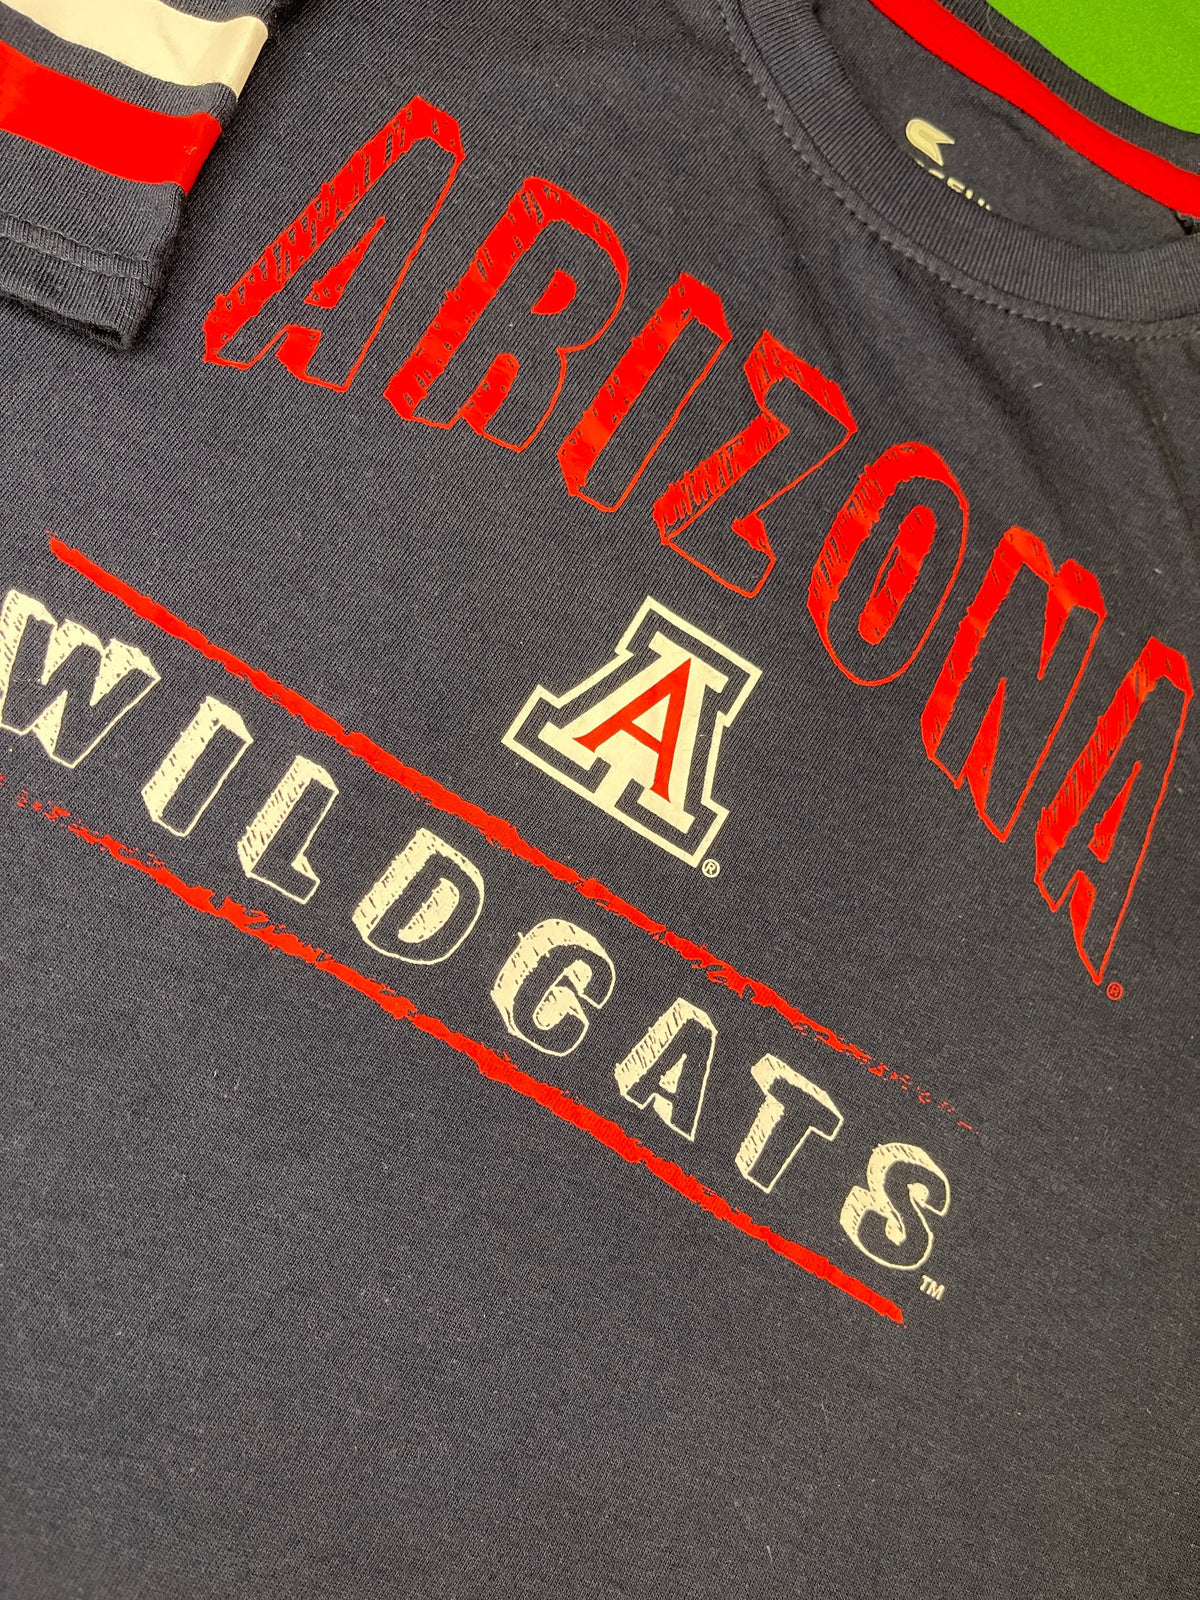 NCAA Arizona Wildcats Colosseum T-Shirt Toddler 3T NWT